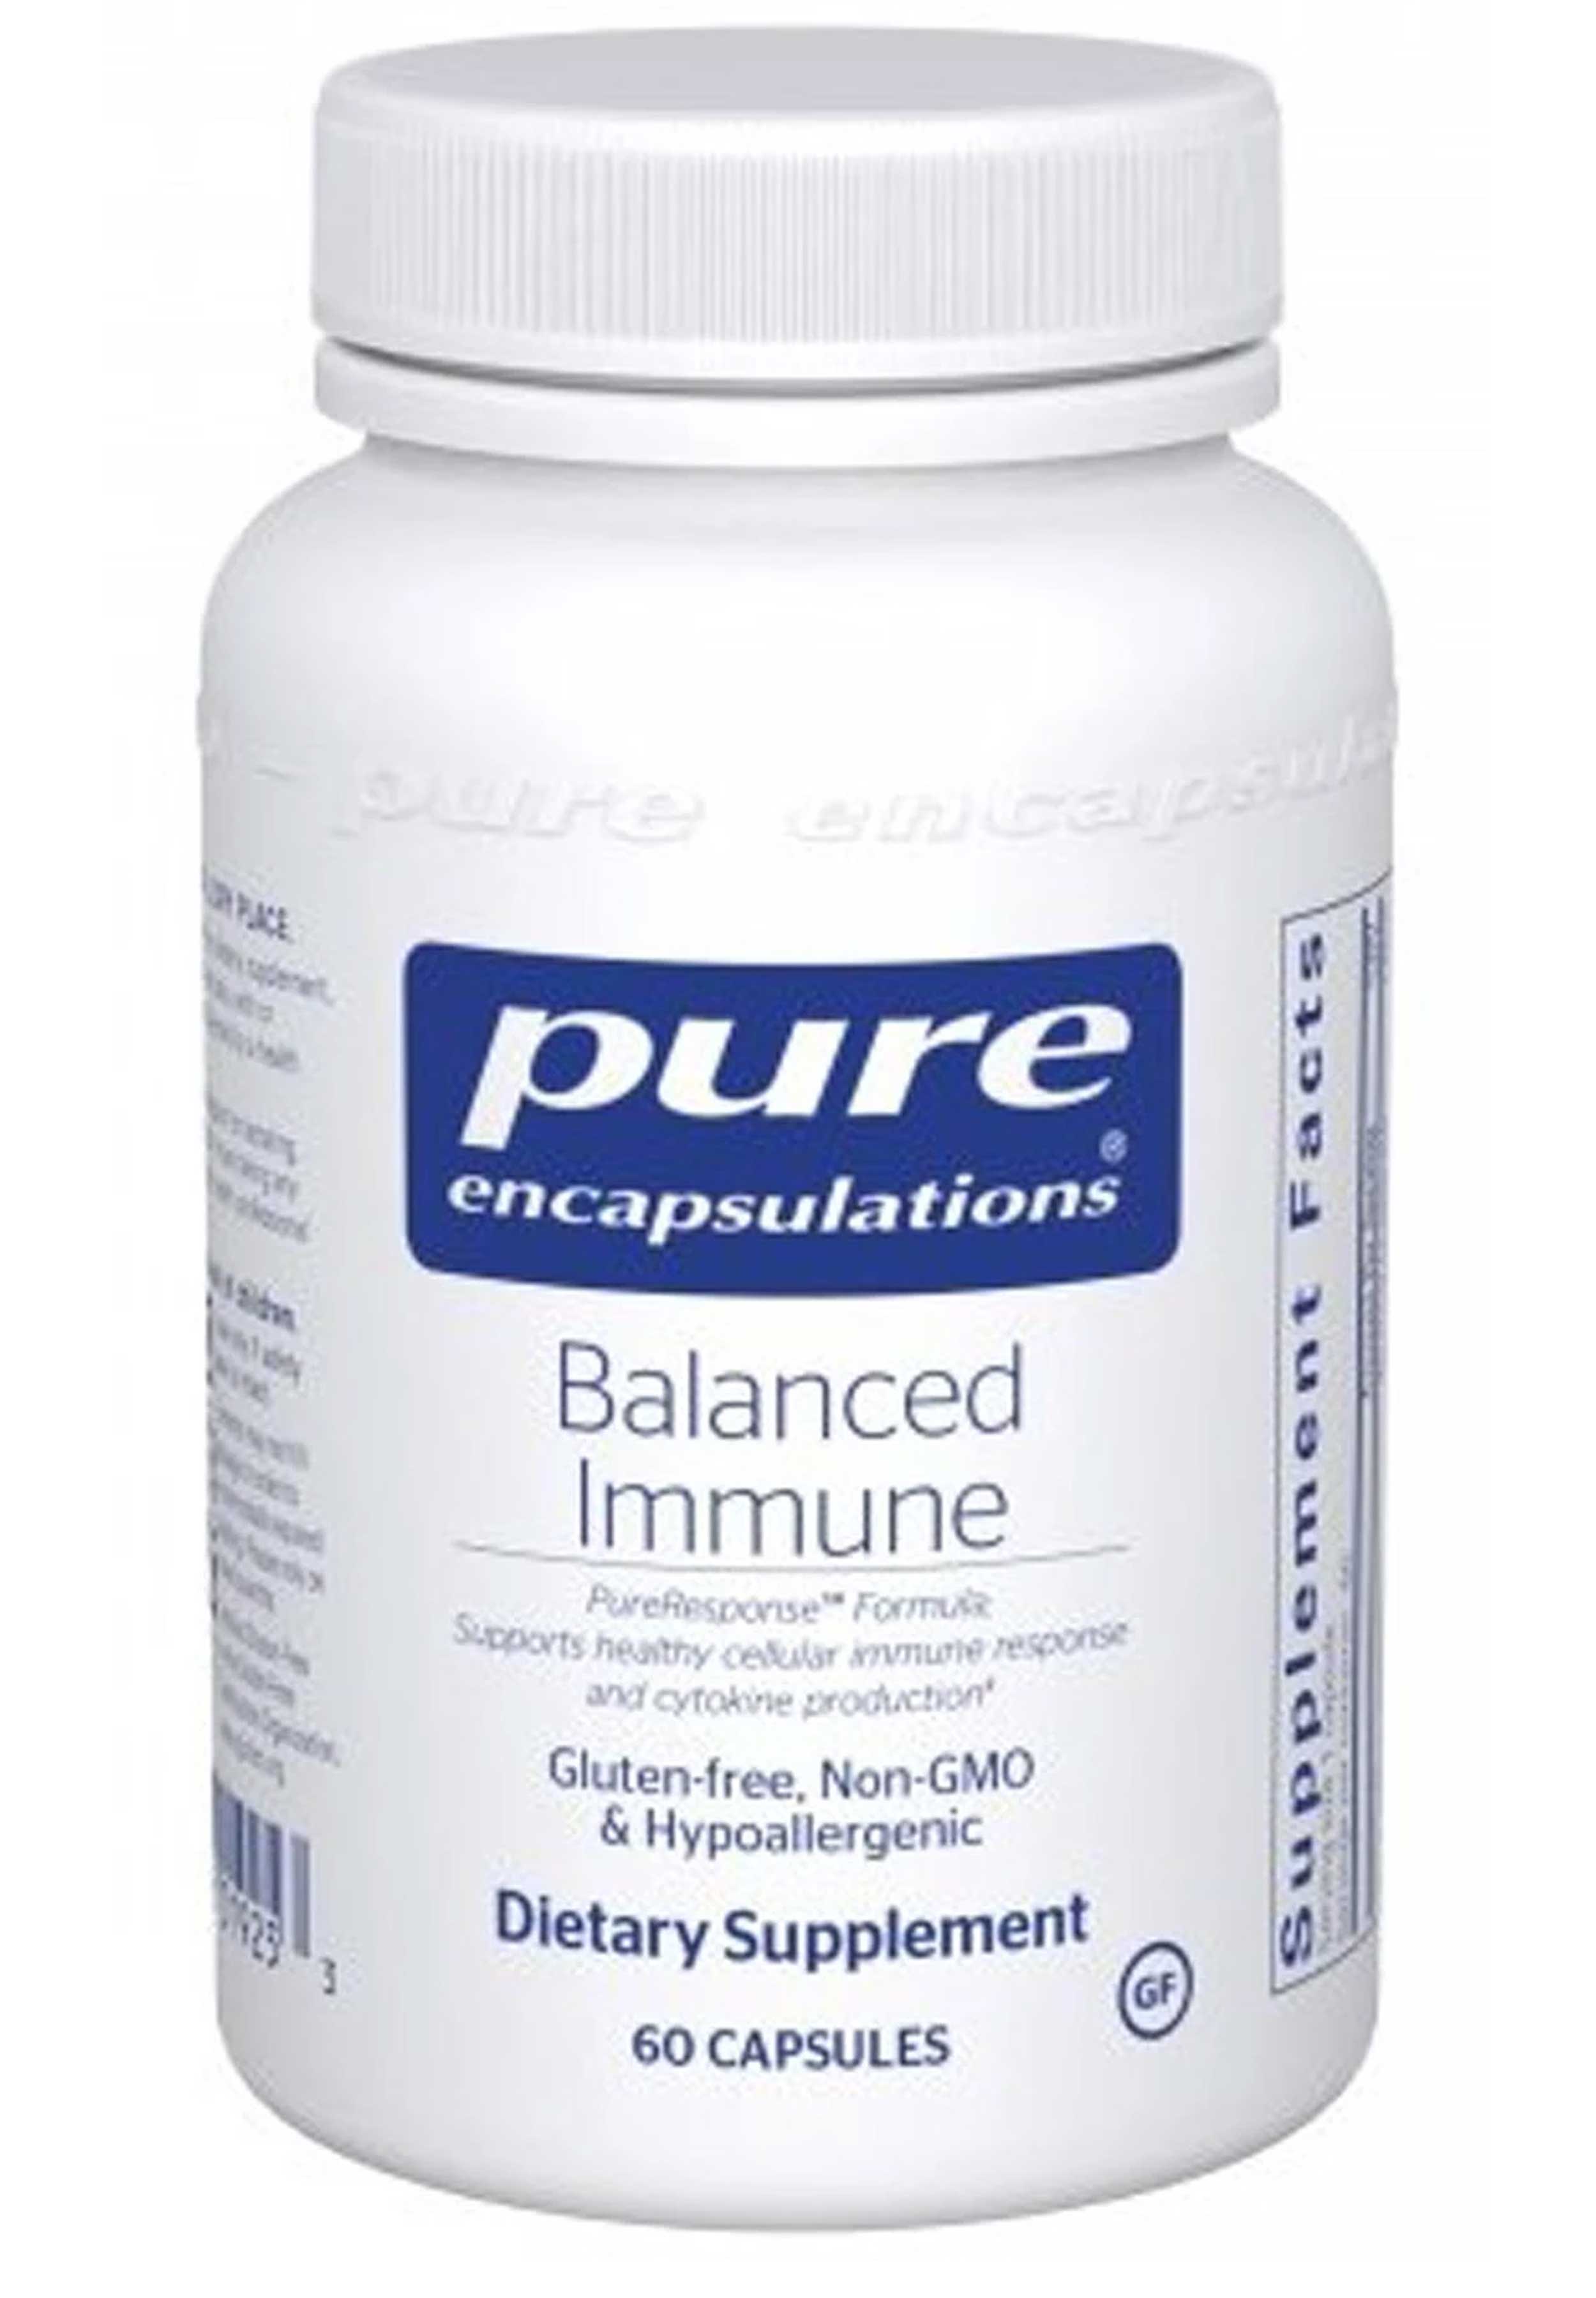 Pure Encapsulations Balanced Immune